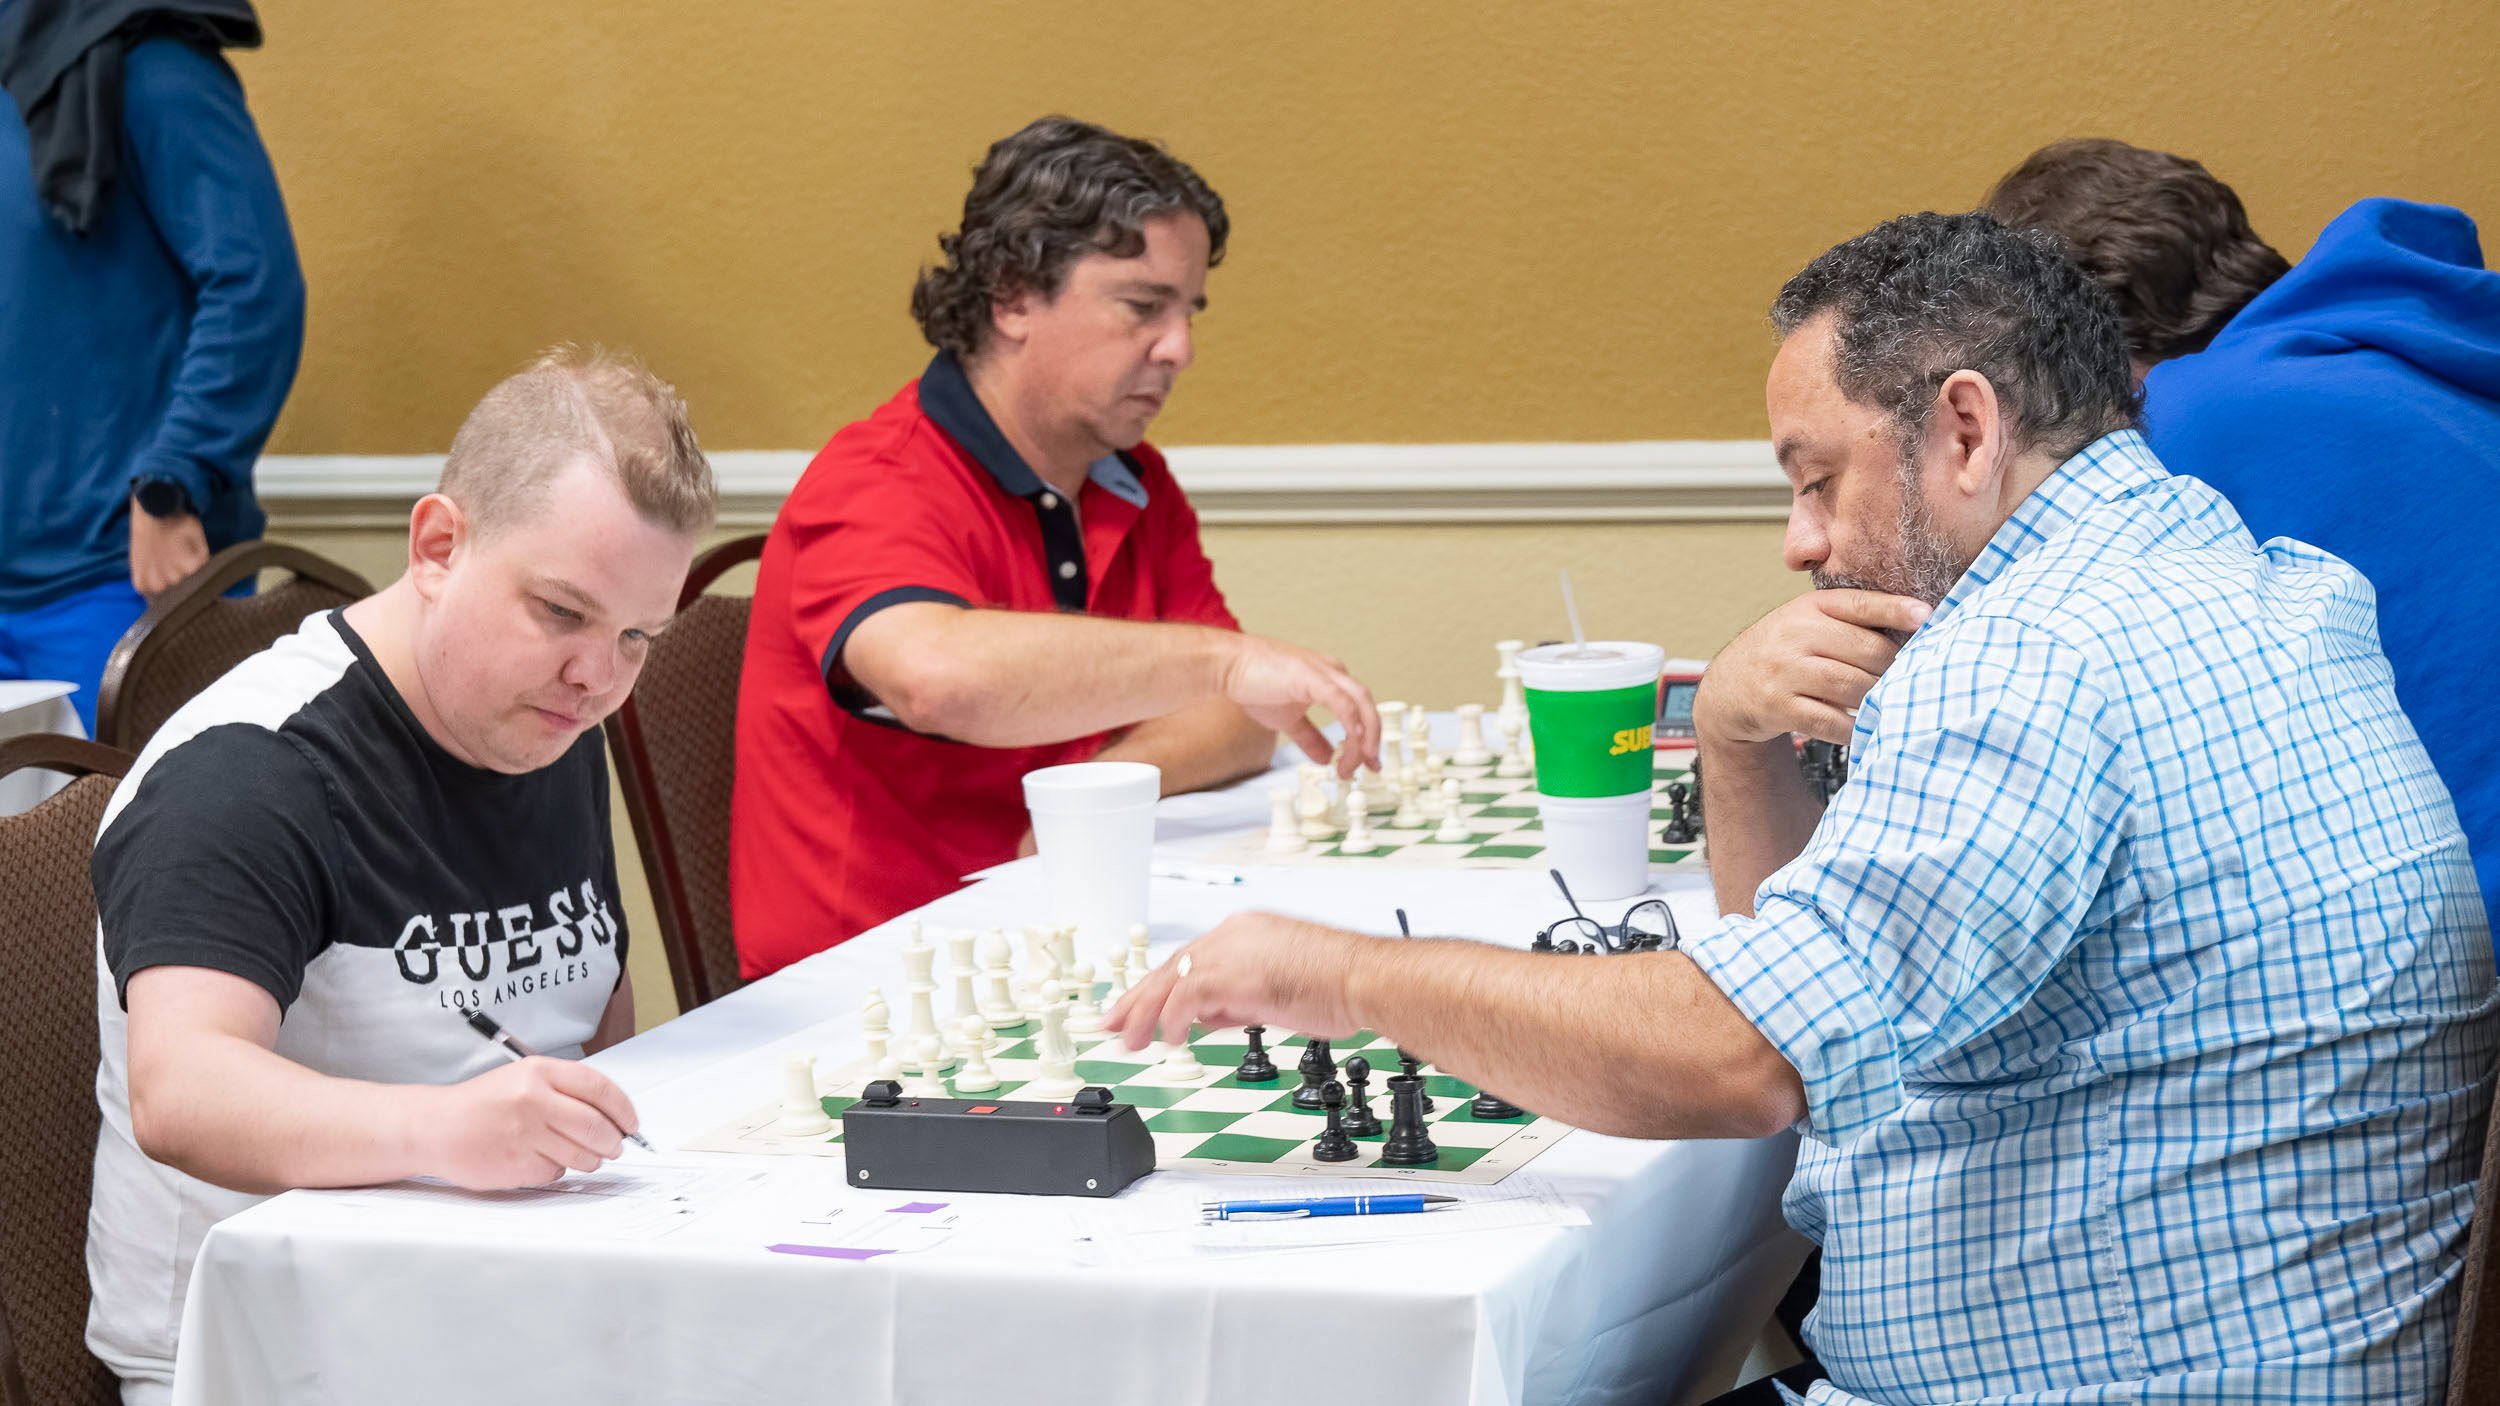 Se viene el tradicional Floripa Chess Open 2024!